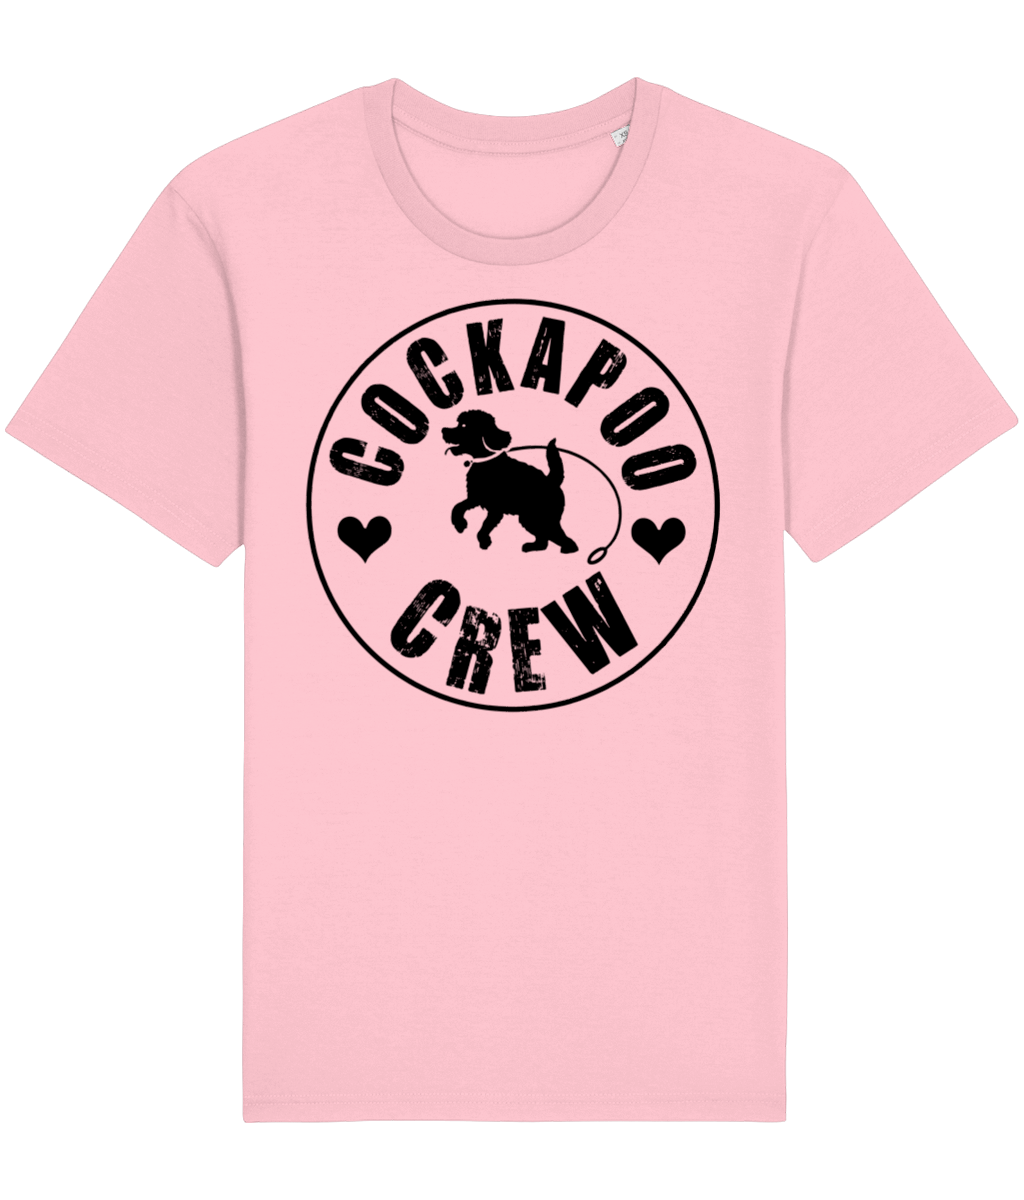 Pink cockapoo crew t-shirt